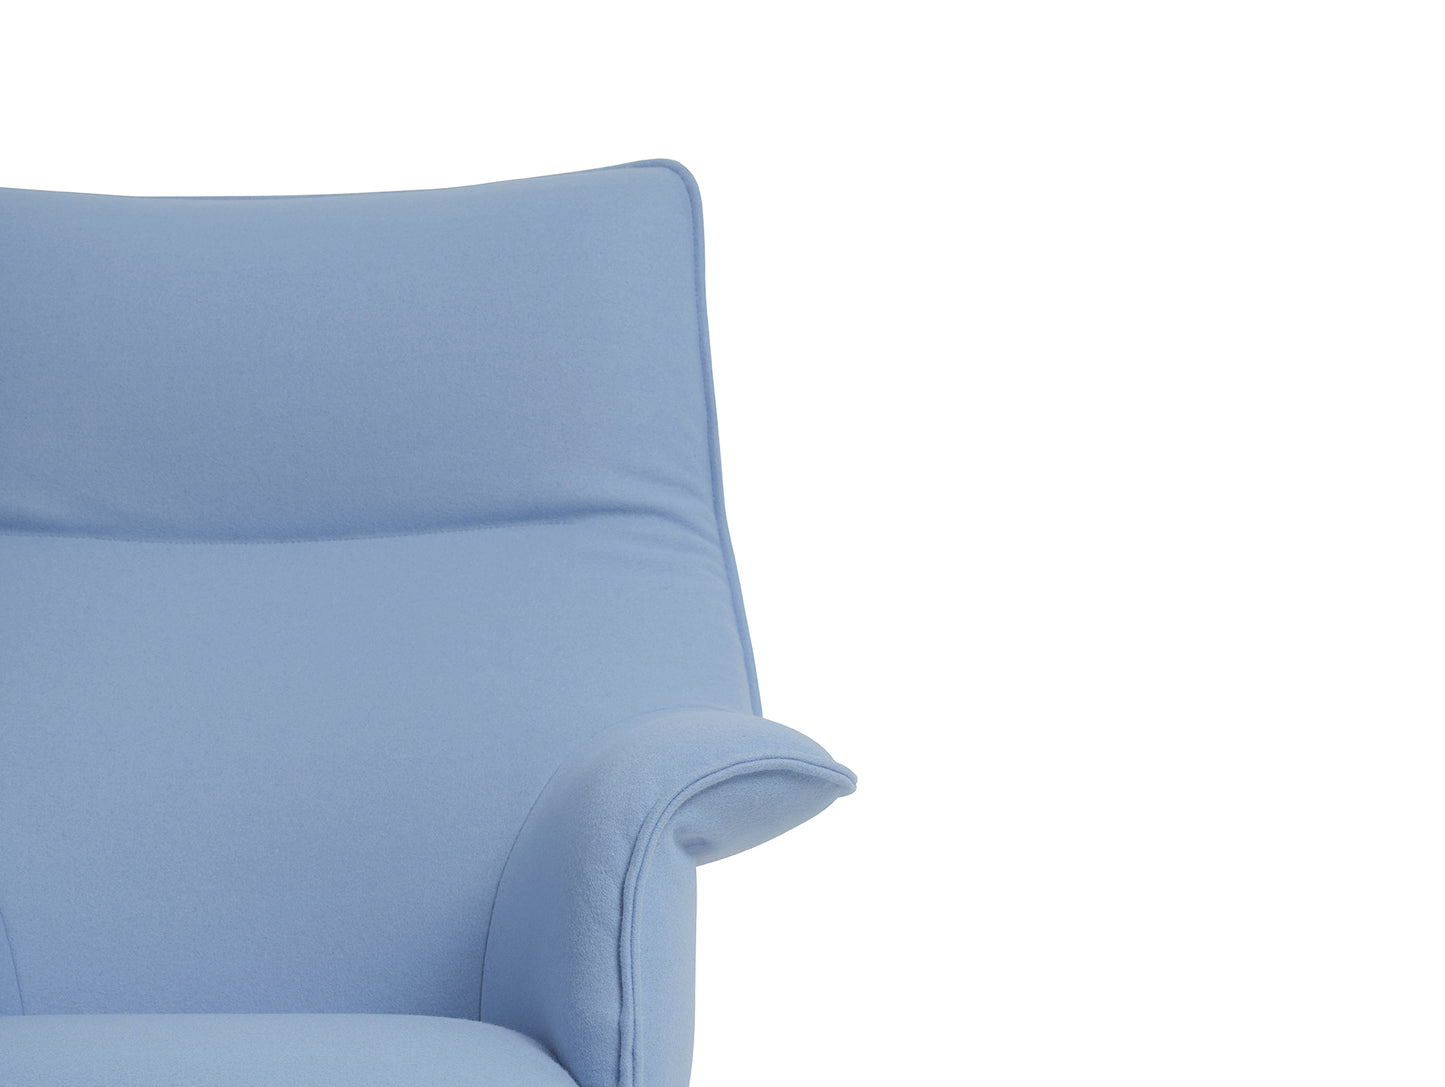 Doze Lounge Chair Low Back - Swivel Base by Muuto / Divina 3 712